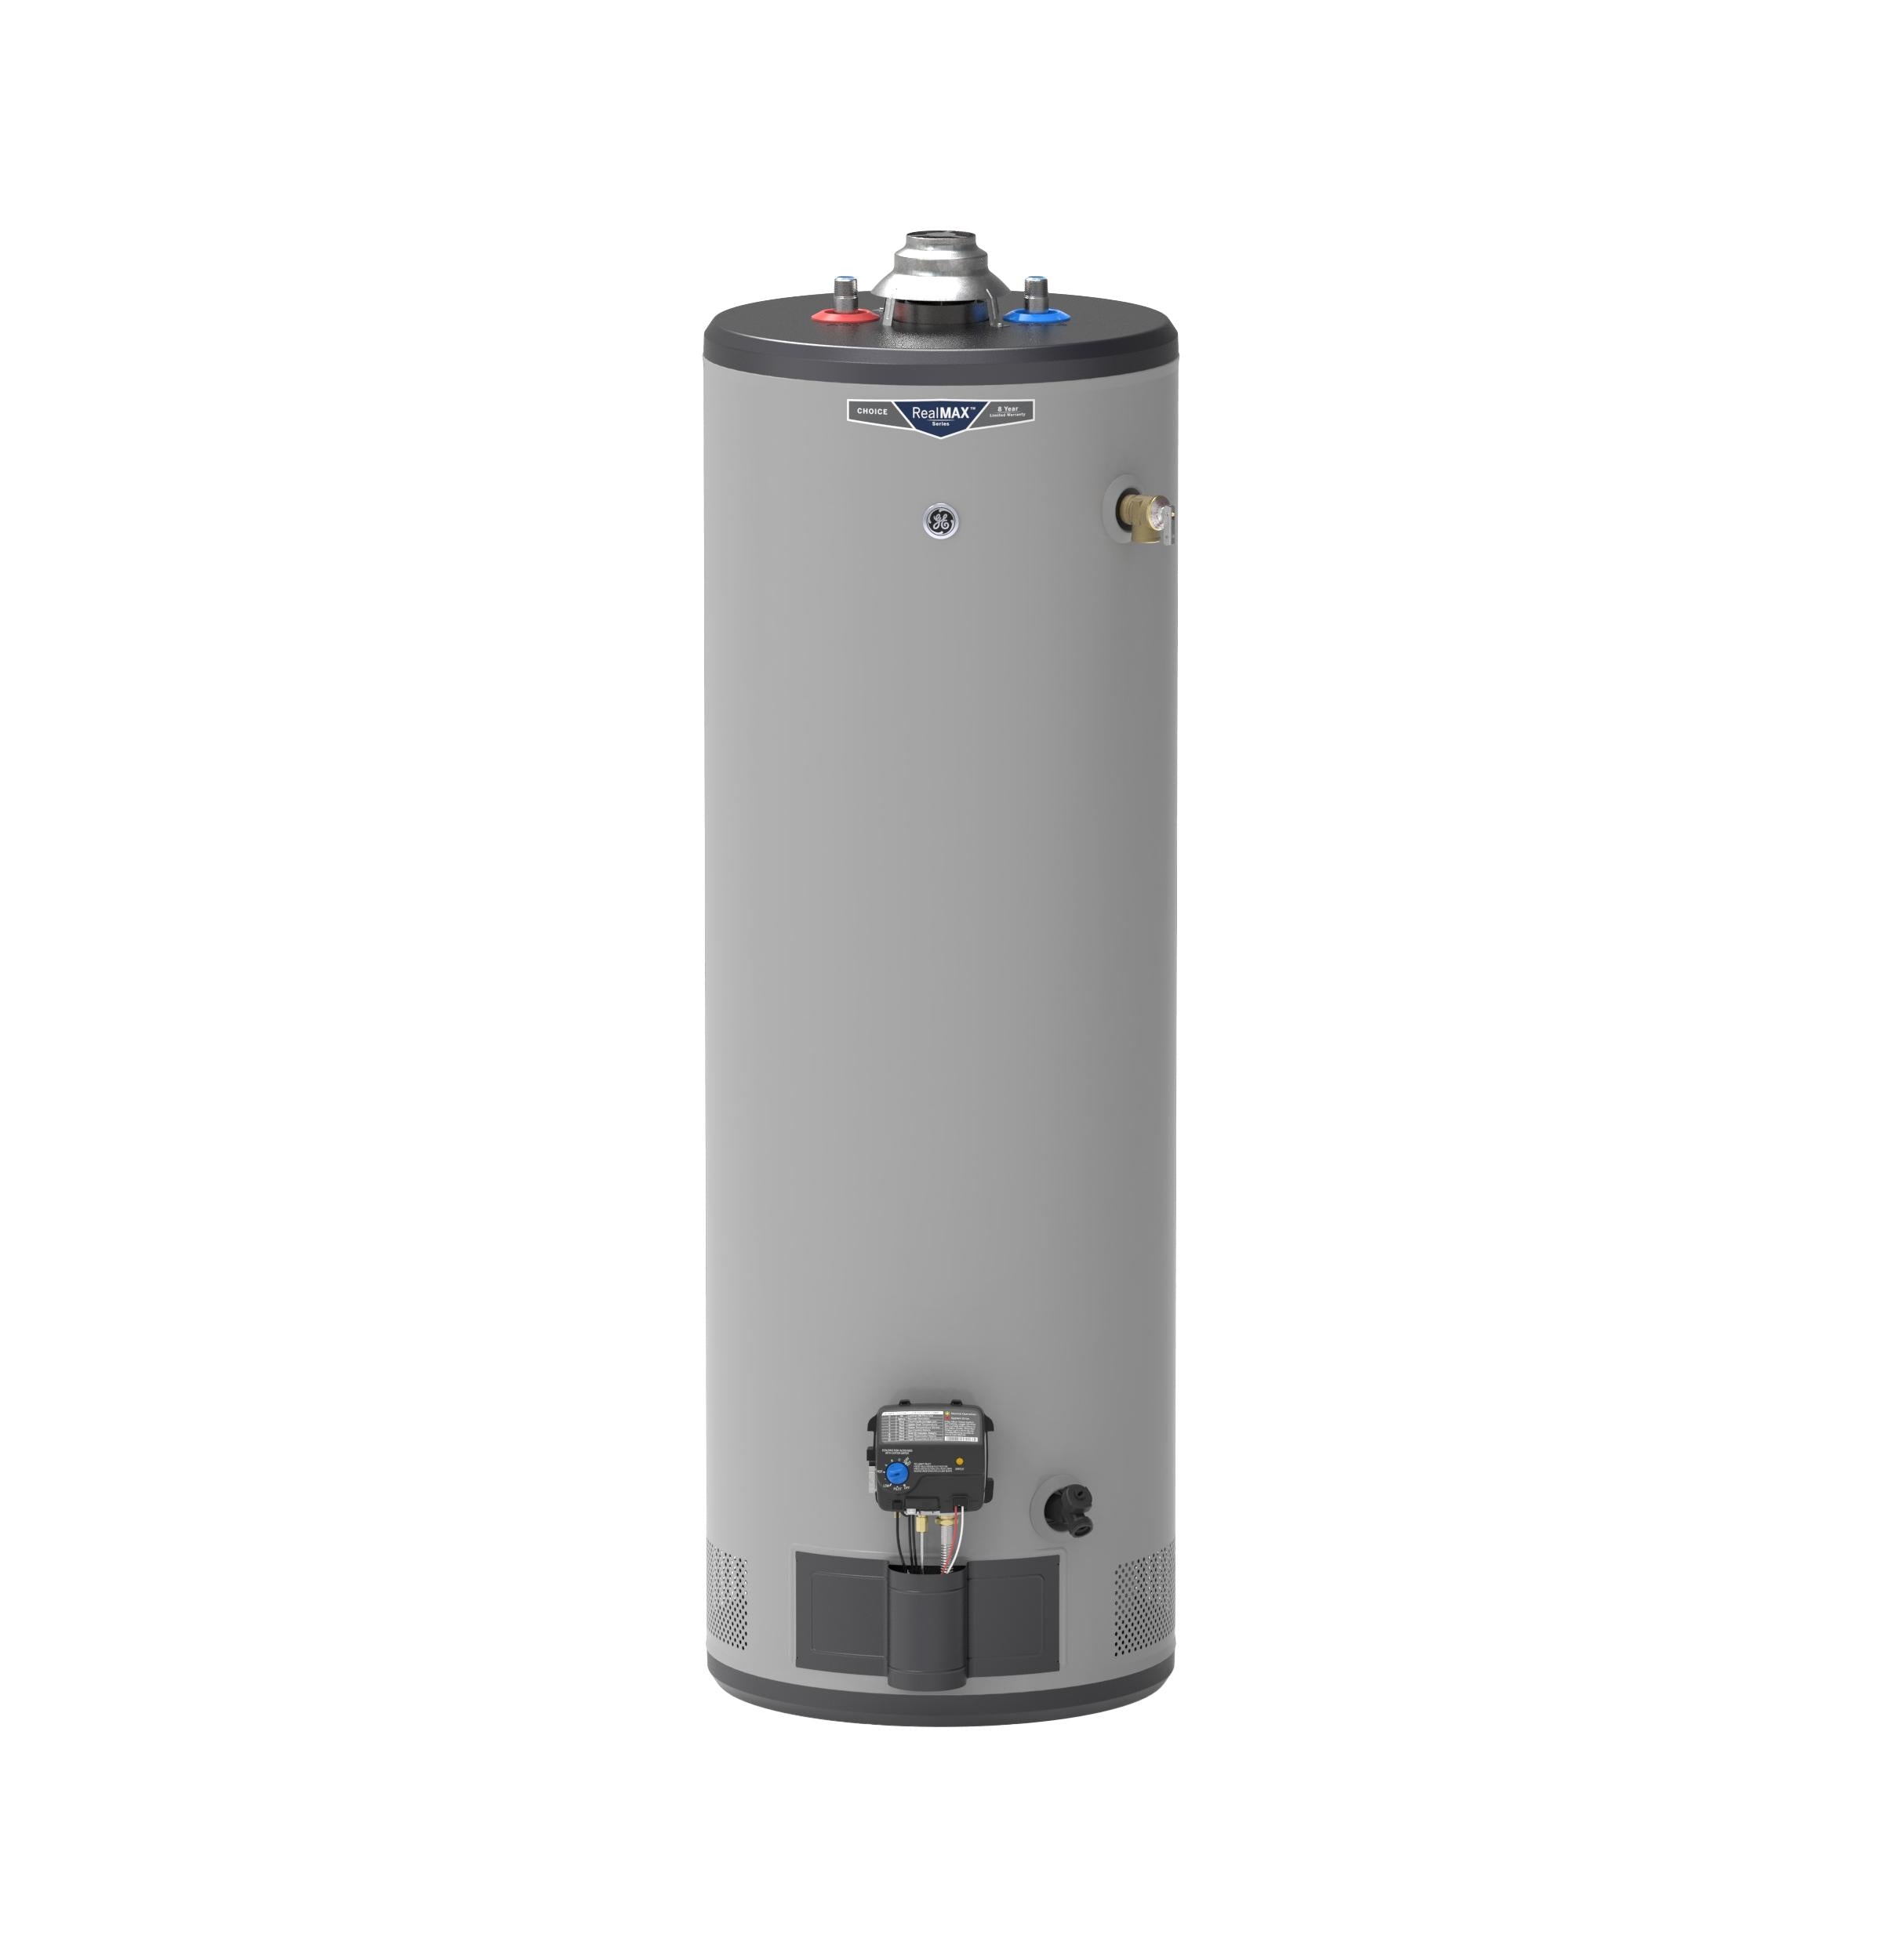 GE RealMAX Choice 40-Gallon Tall Liquid Propane Atmospheric Water Heater